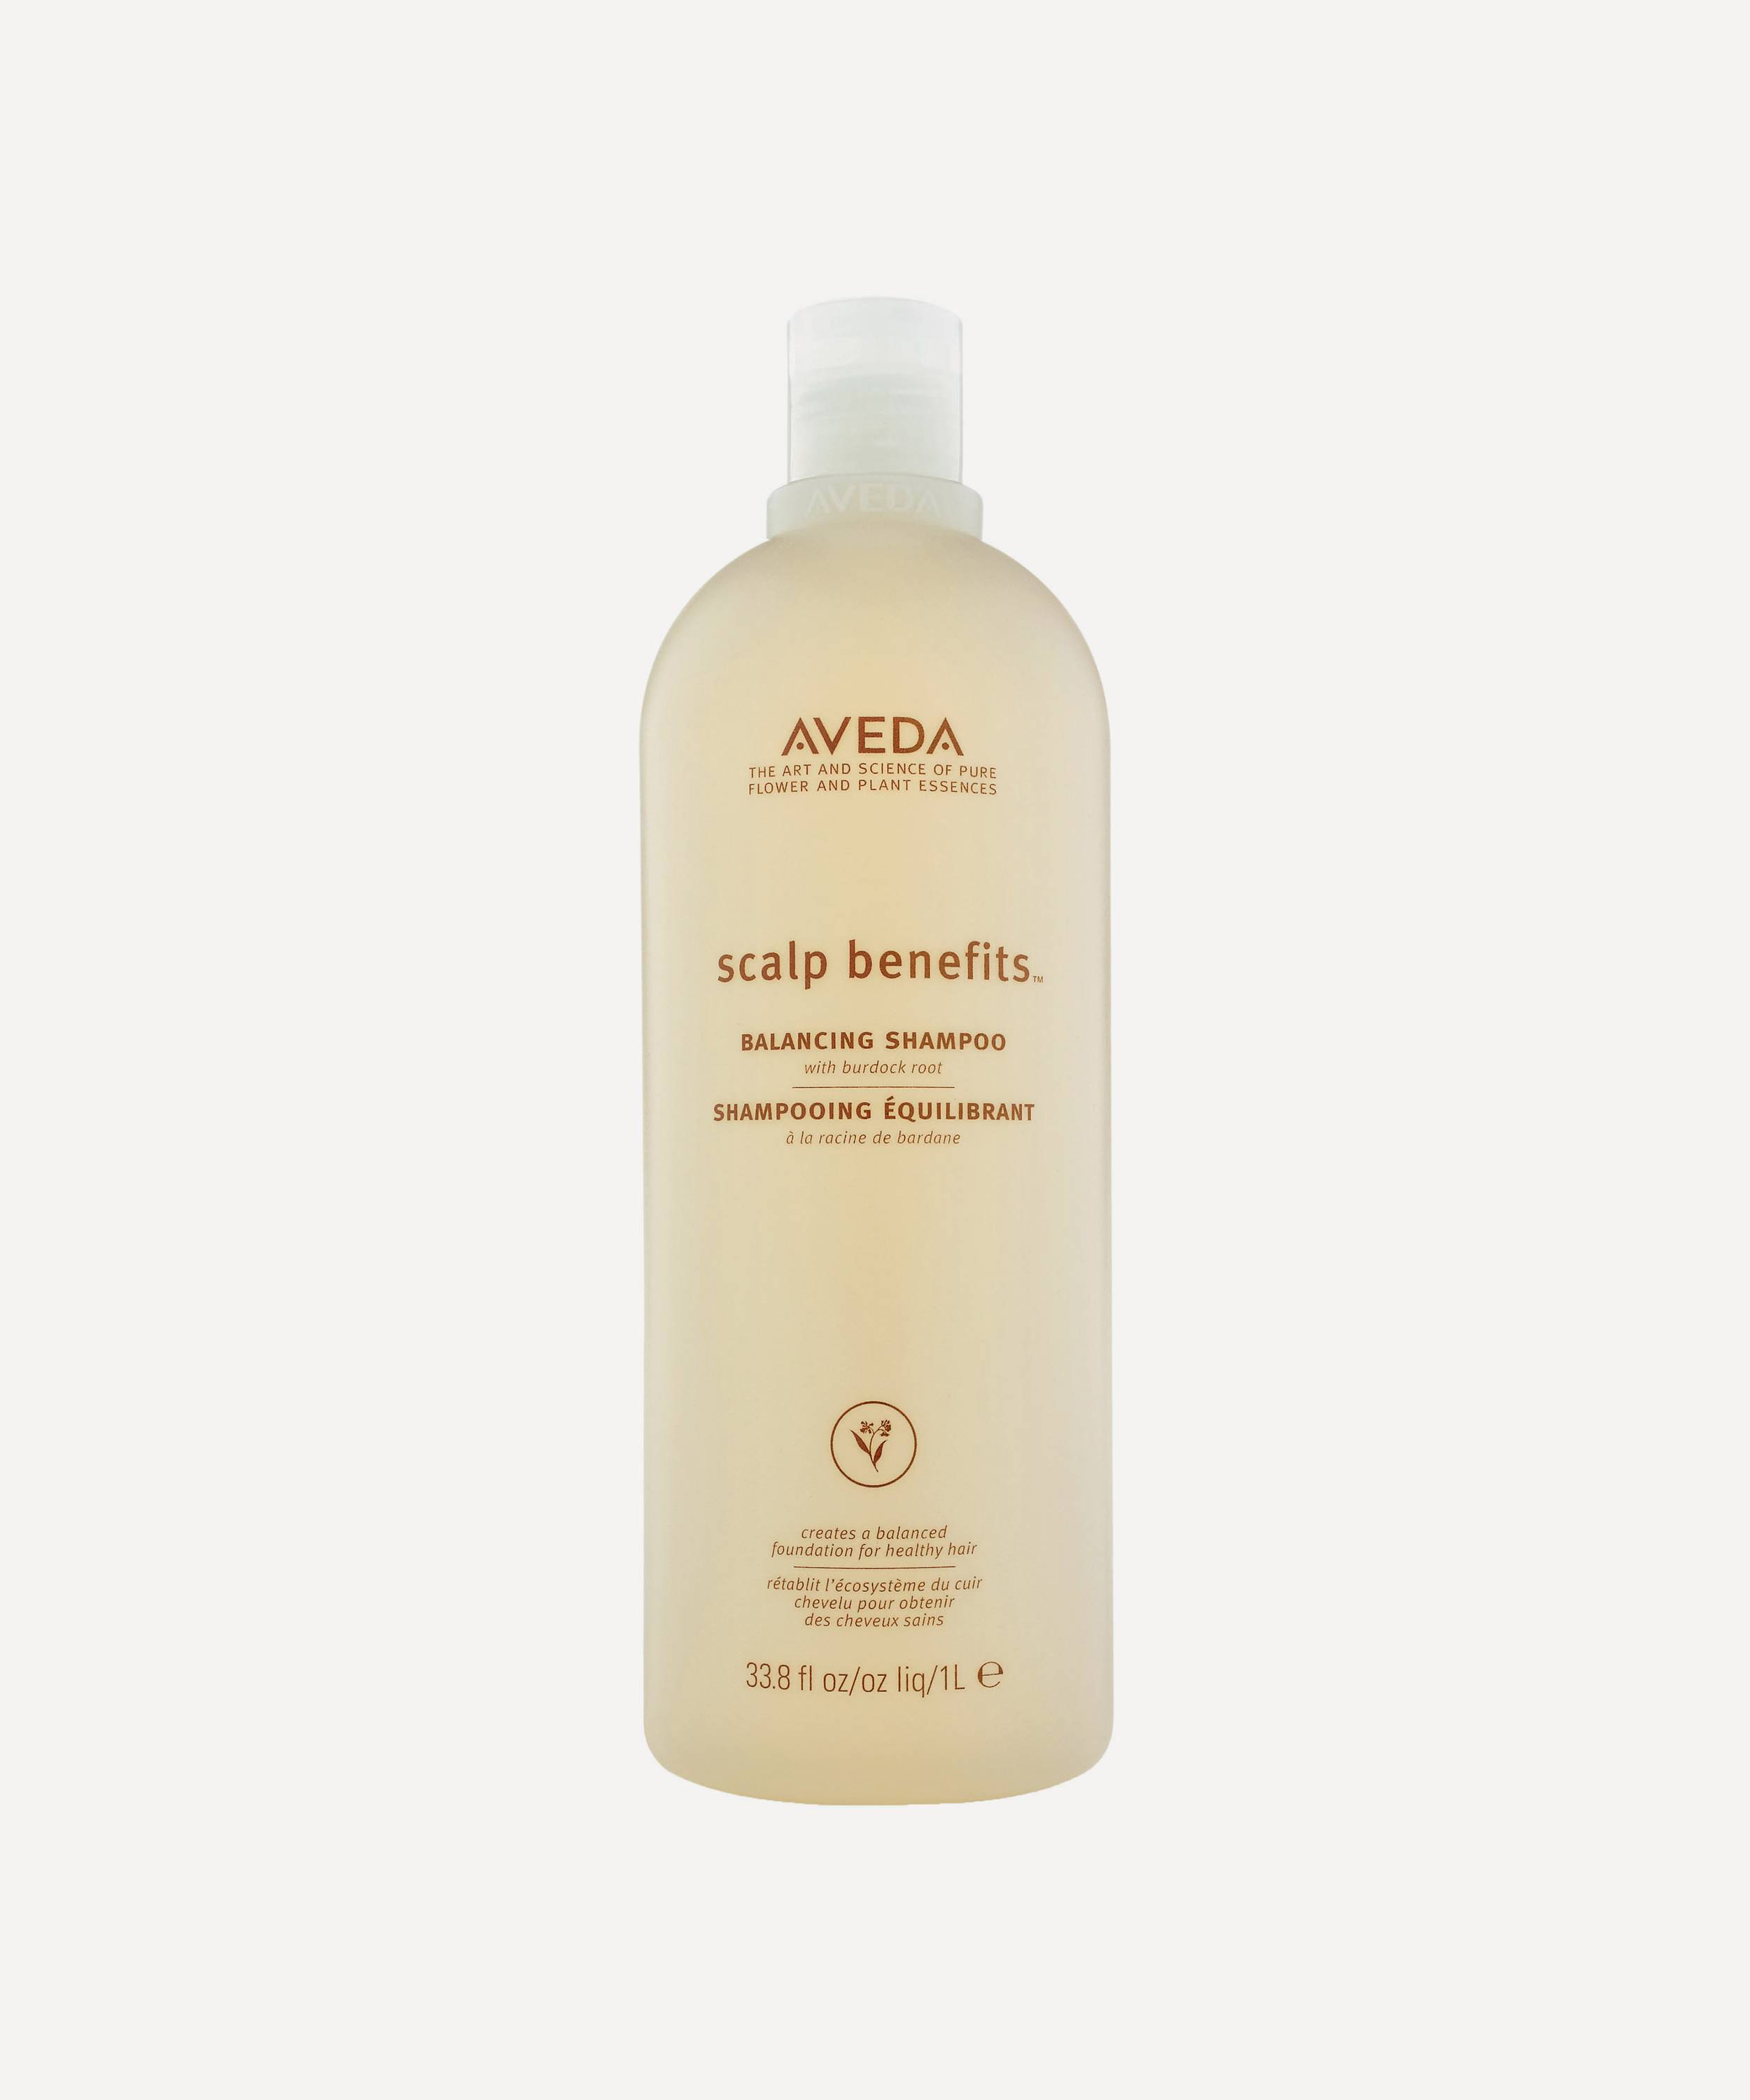 Og hold Agurk buffet Aveda Scalp Benefits Balancing Shampoo 1000ml | Liberty